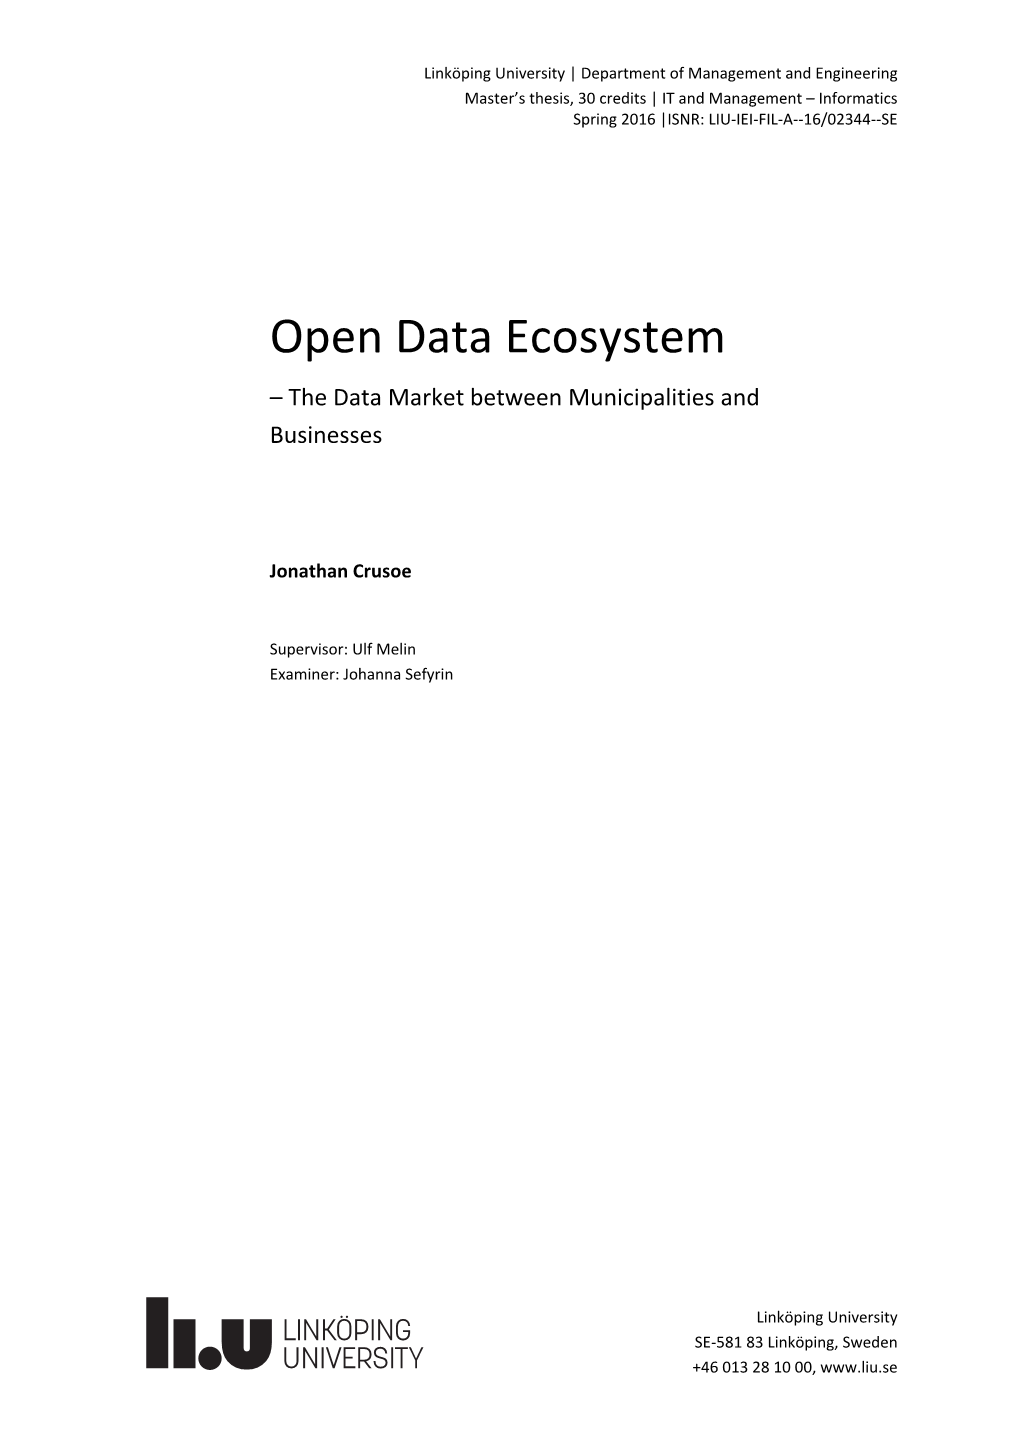 Open Data Ecosystem – the Data Market Between Municipalities and Businesses